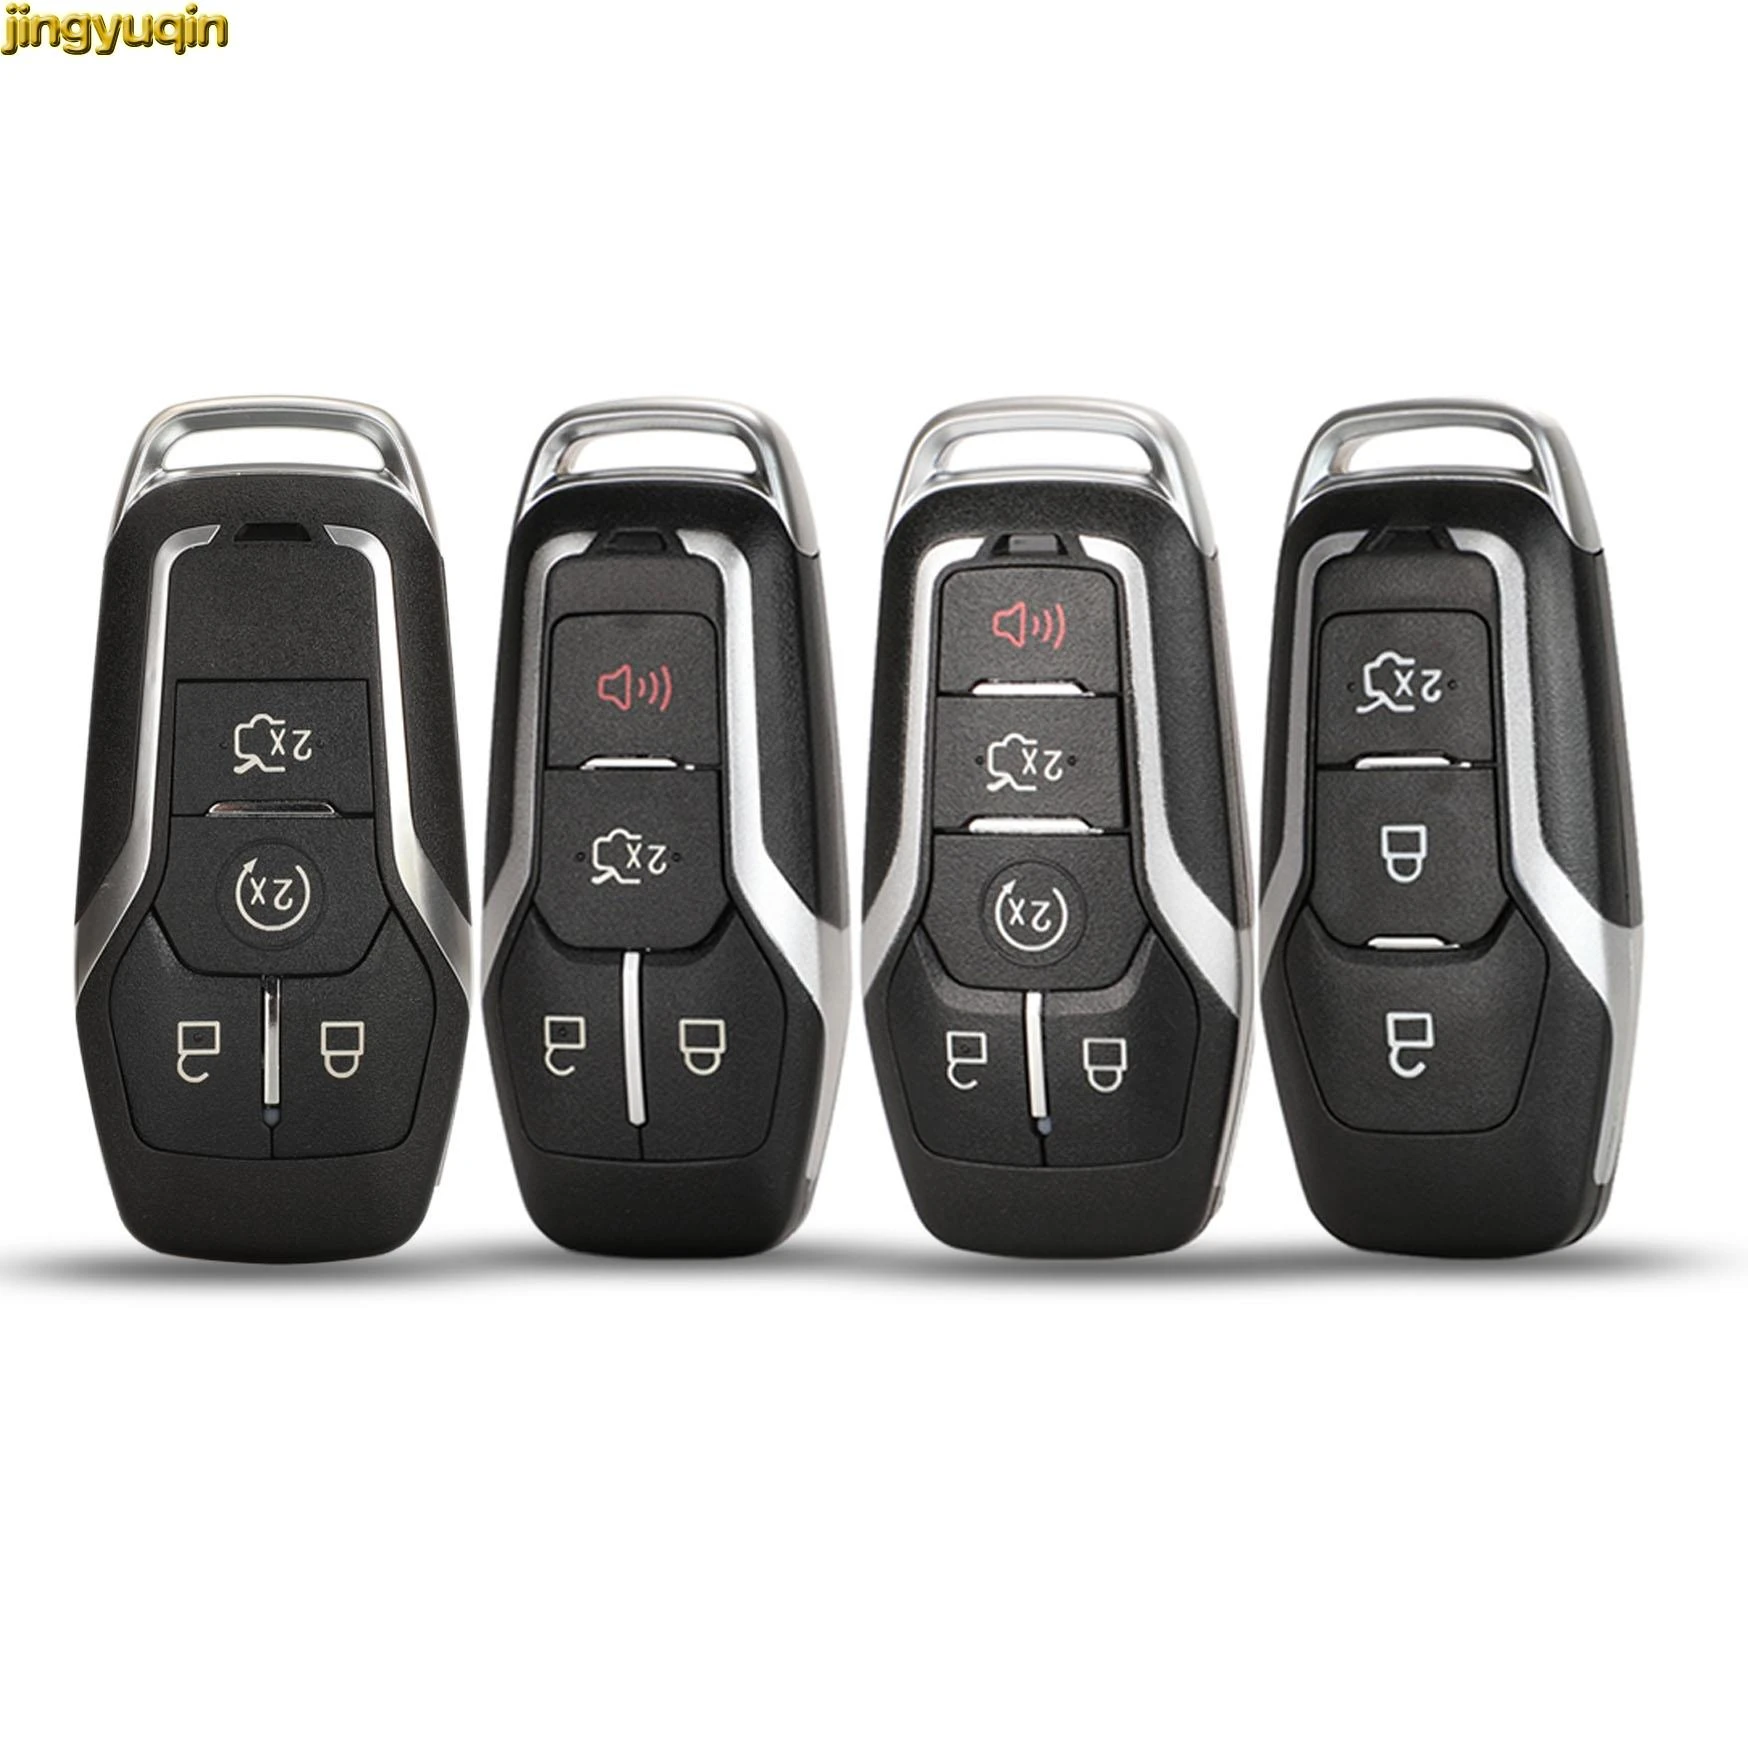 jingyuqin 3/4/5 Buttons Remote Car Key Shell For Ford Edge Explorer Fusion 2015 2016 2017 M3N-A2C31243300 Smart Key Fob